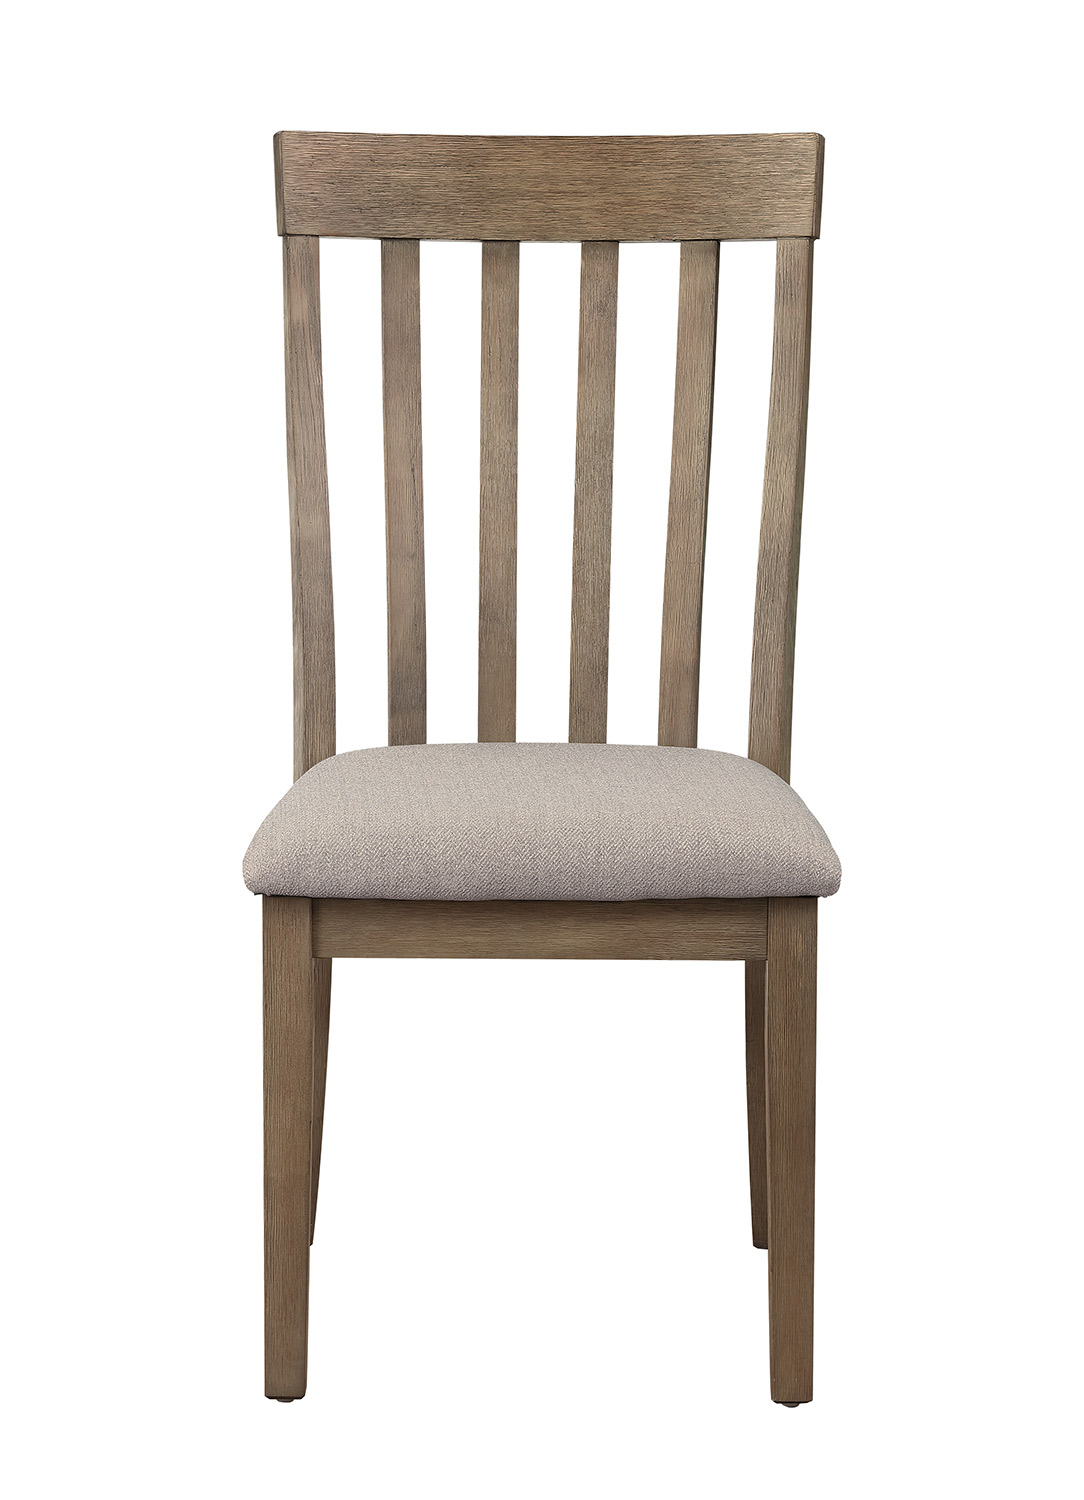 Homelegance Armhurst Side Chair - Brown